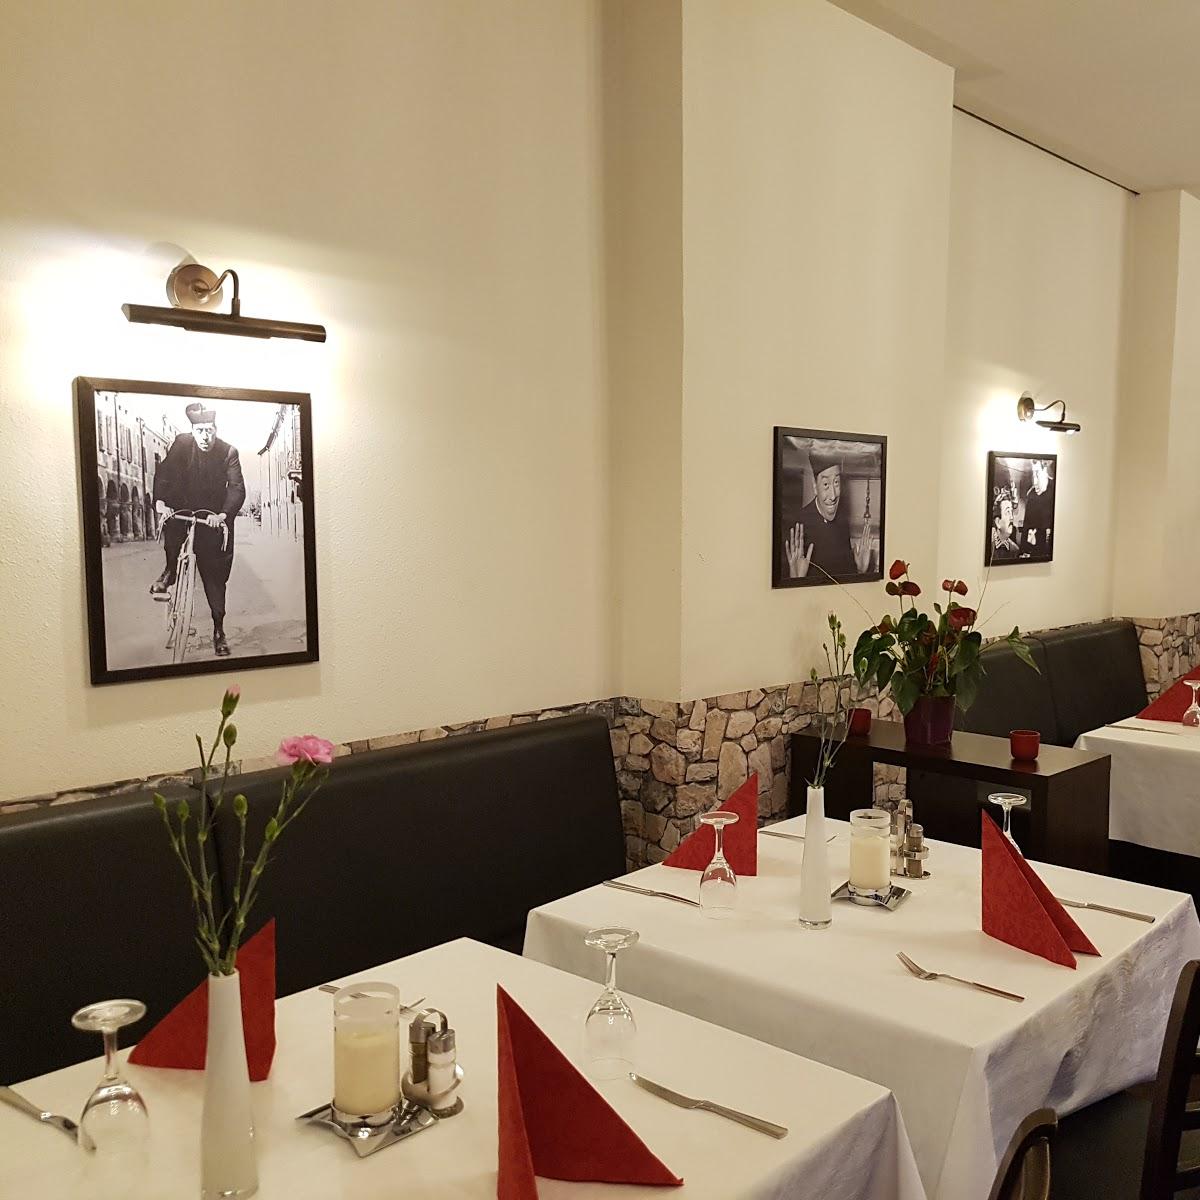 Restaurant "Don Camillo" in Dresden